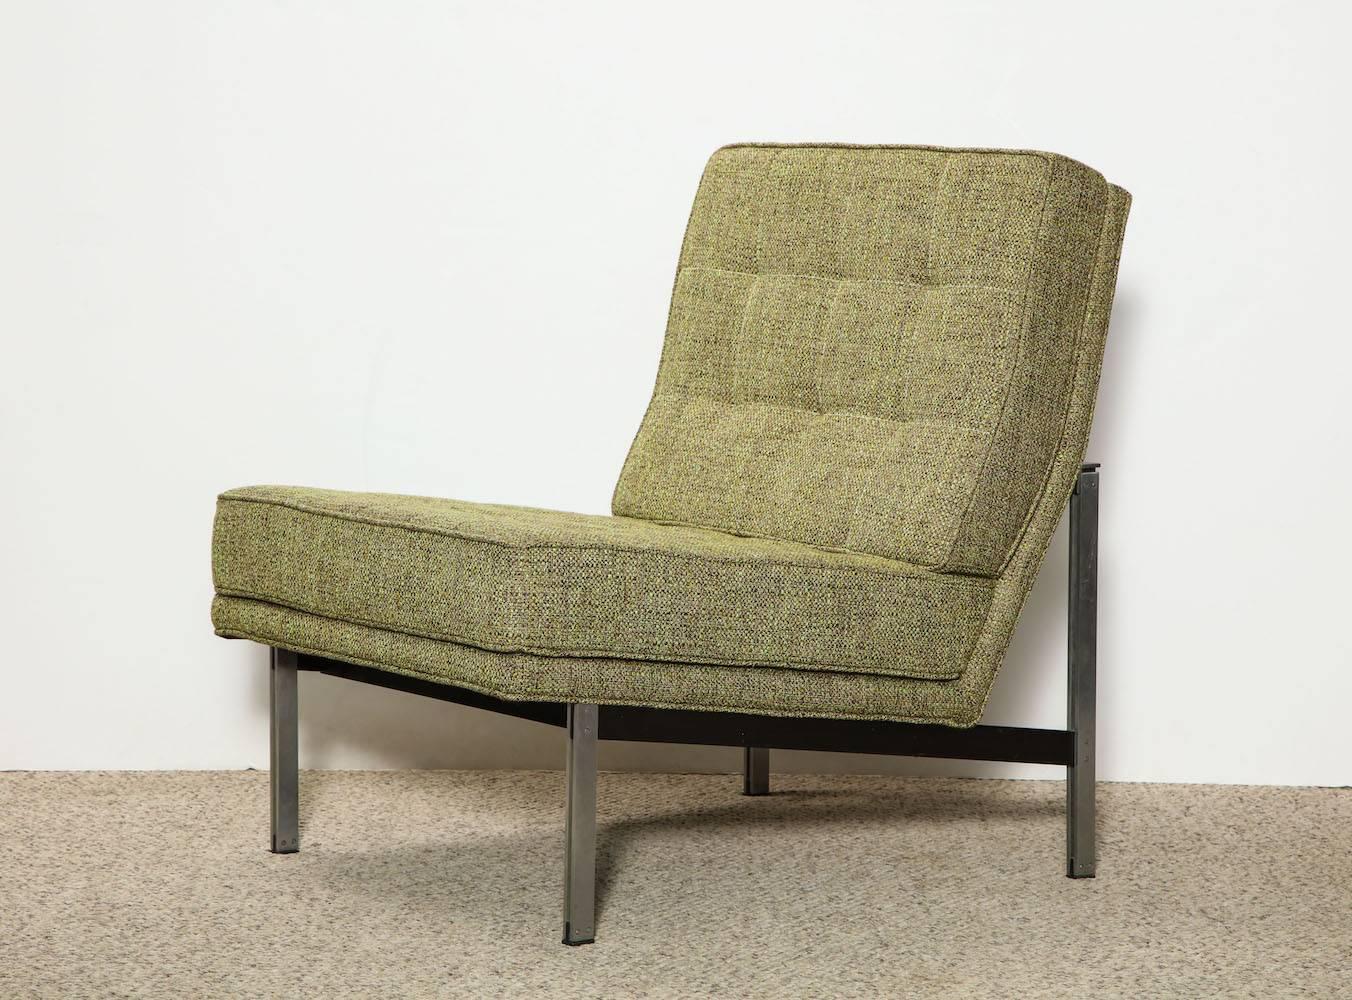 Florence Knoll Lounge Chairs (Moderne der Mitte des Jahrhunderts)